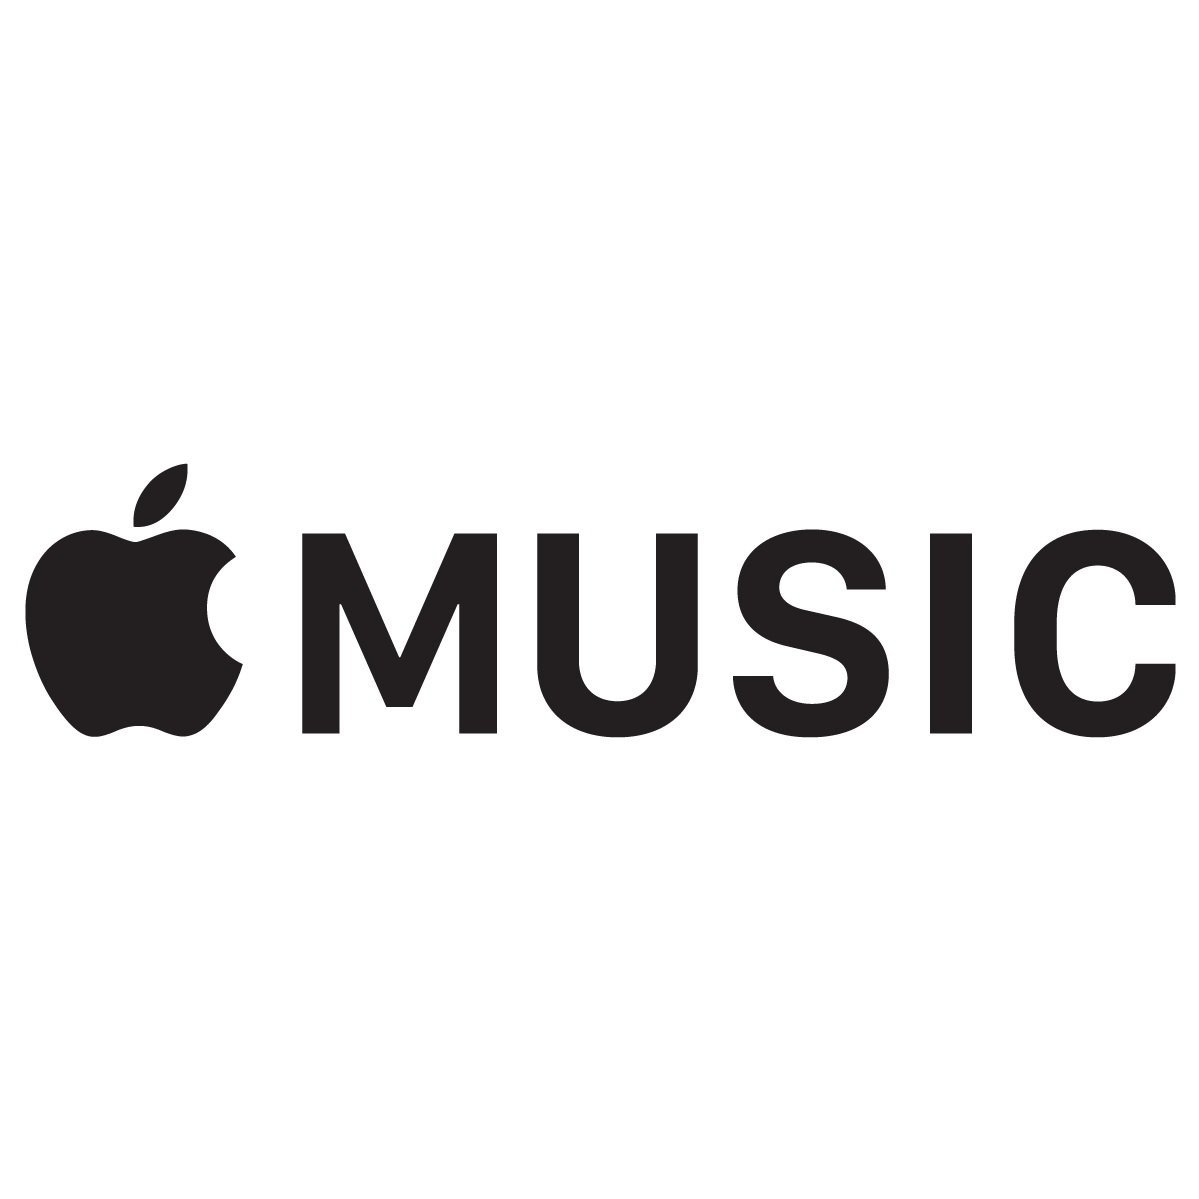 Apple music royalty calculator